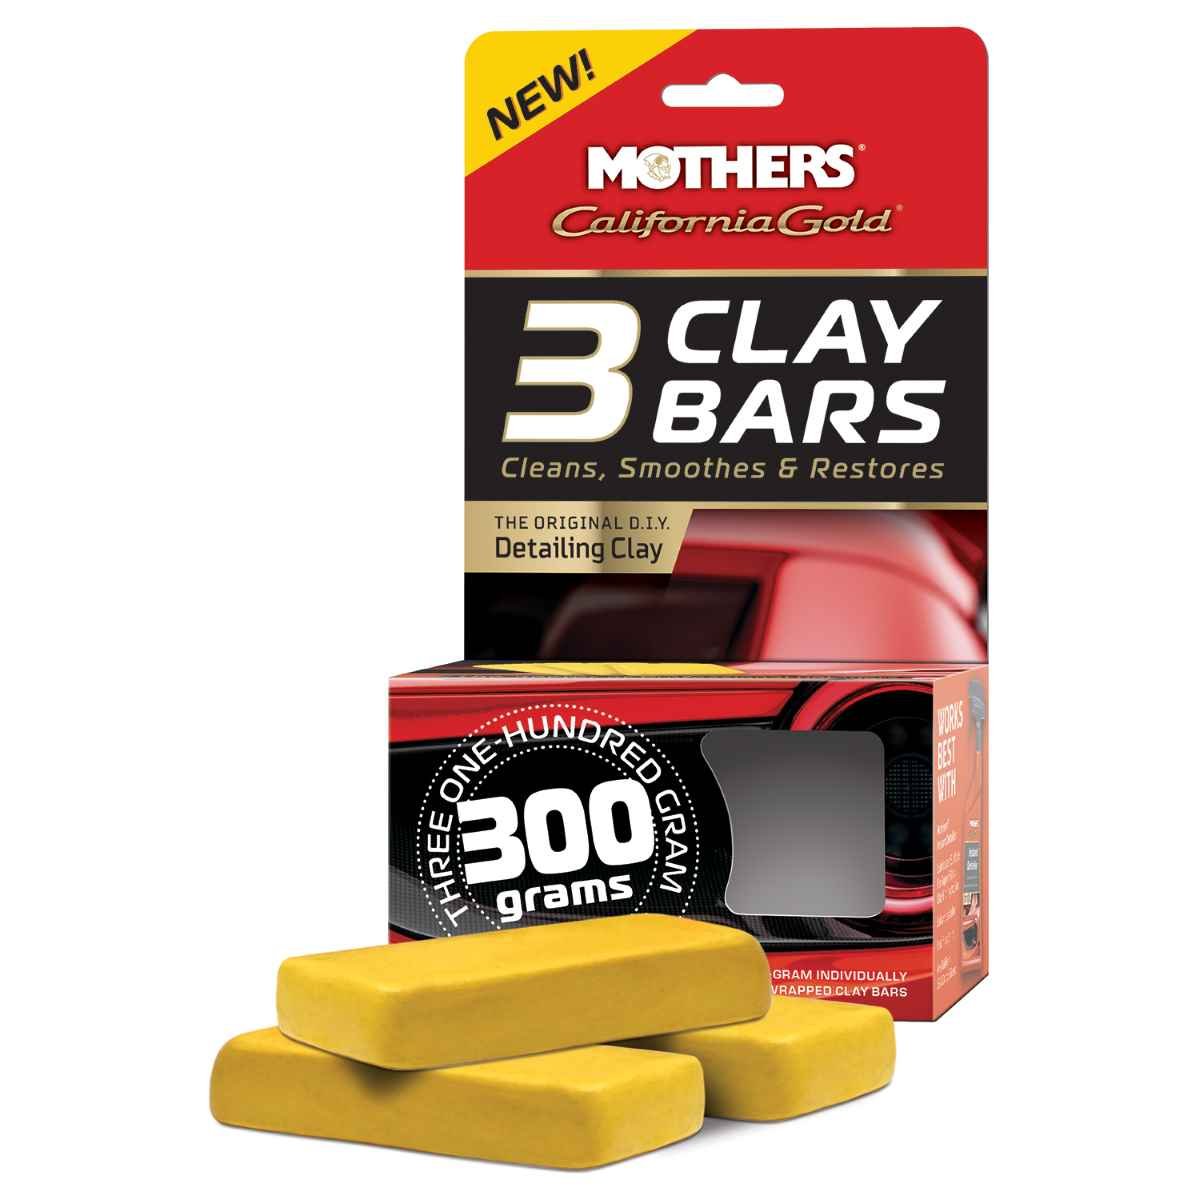 California Gold Clay Bars - 3 x 100 gram